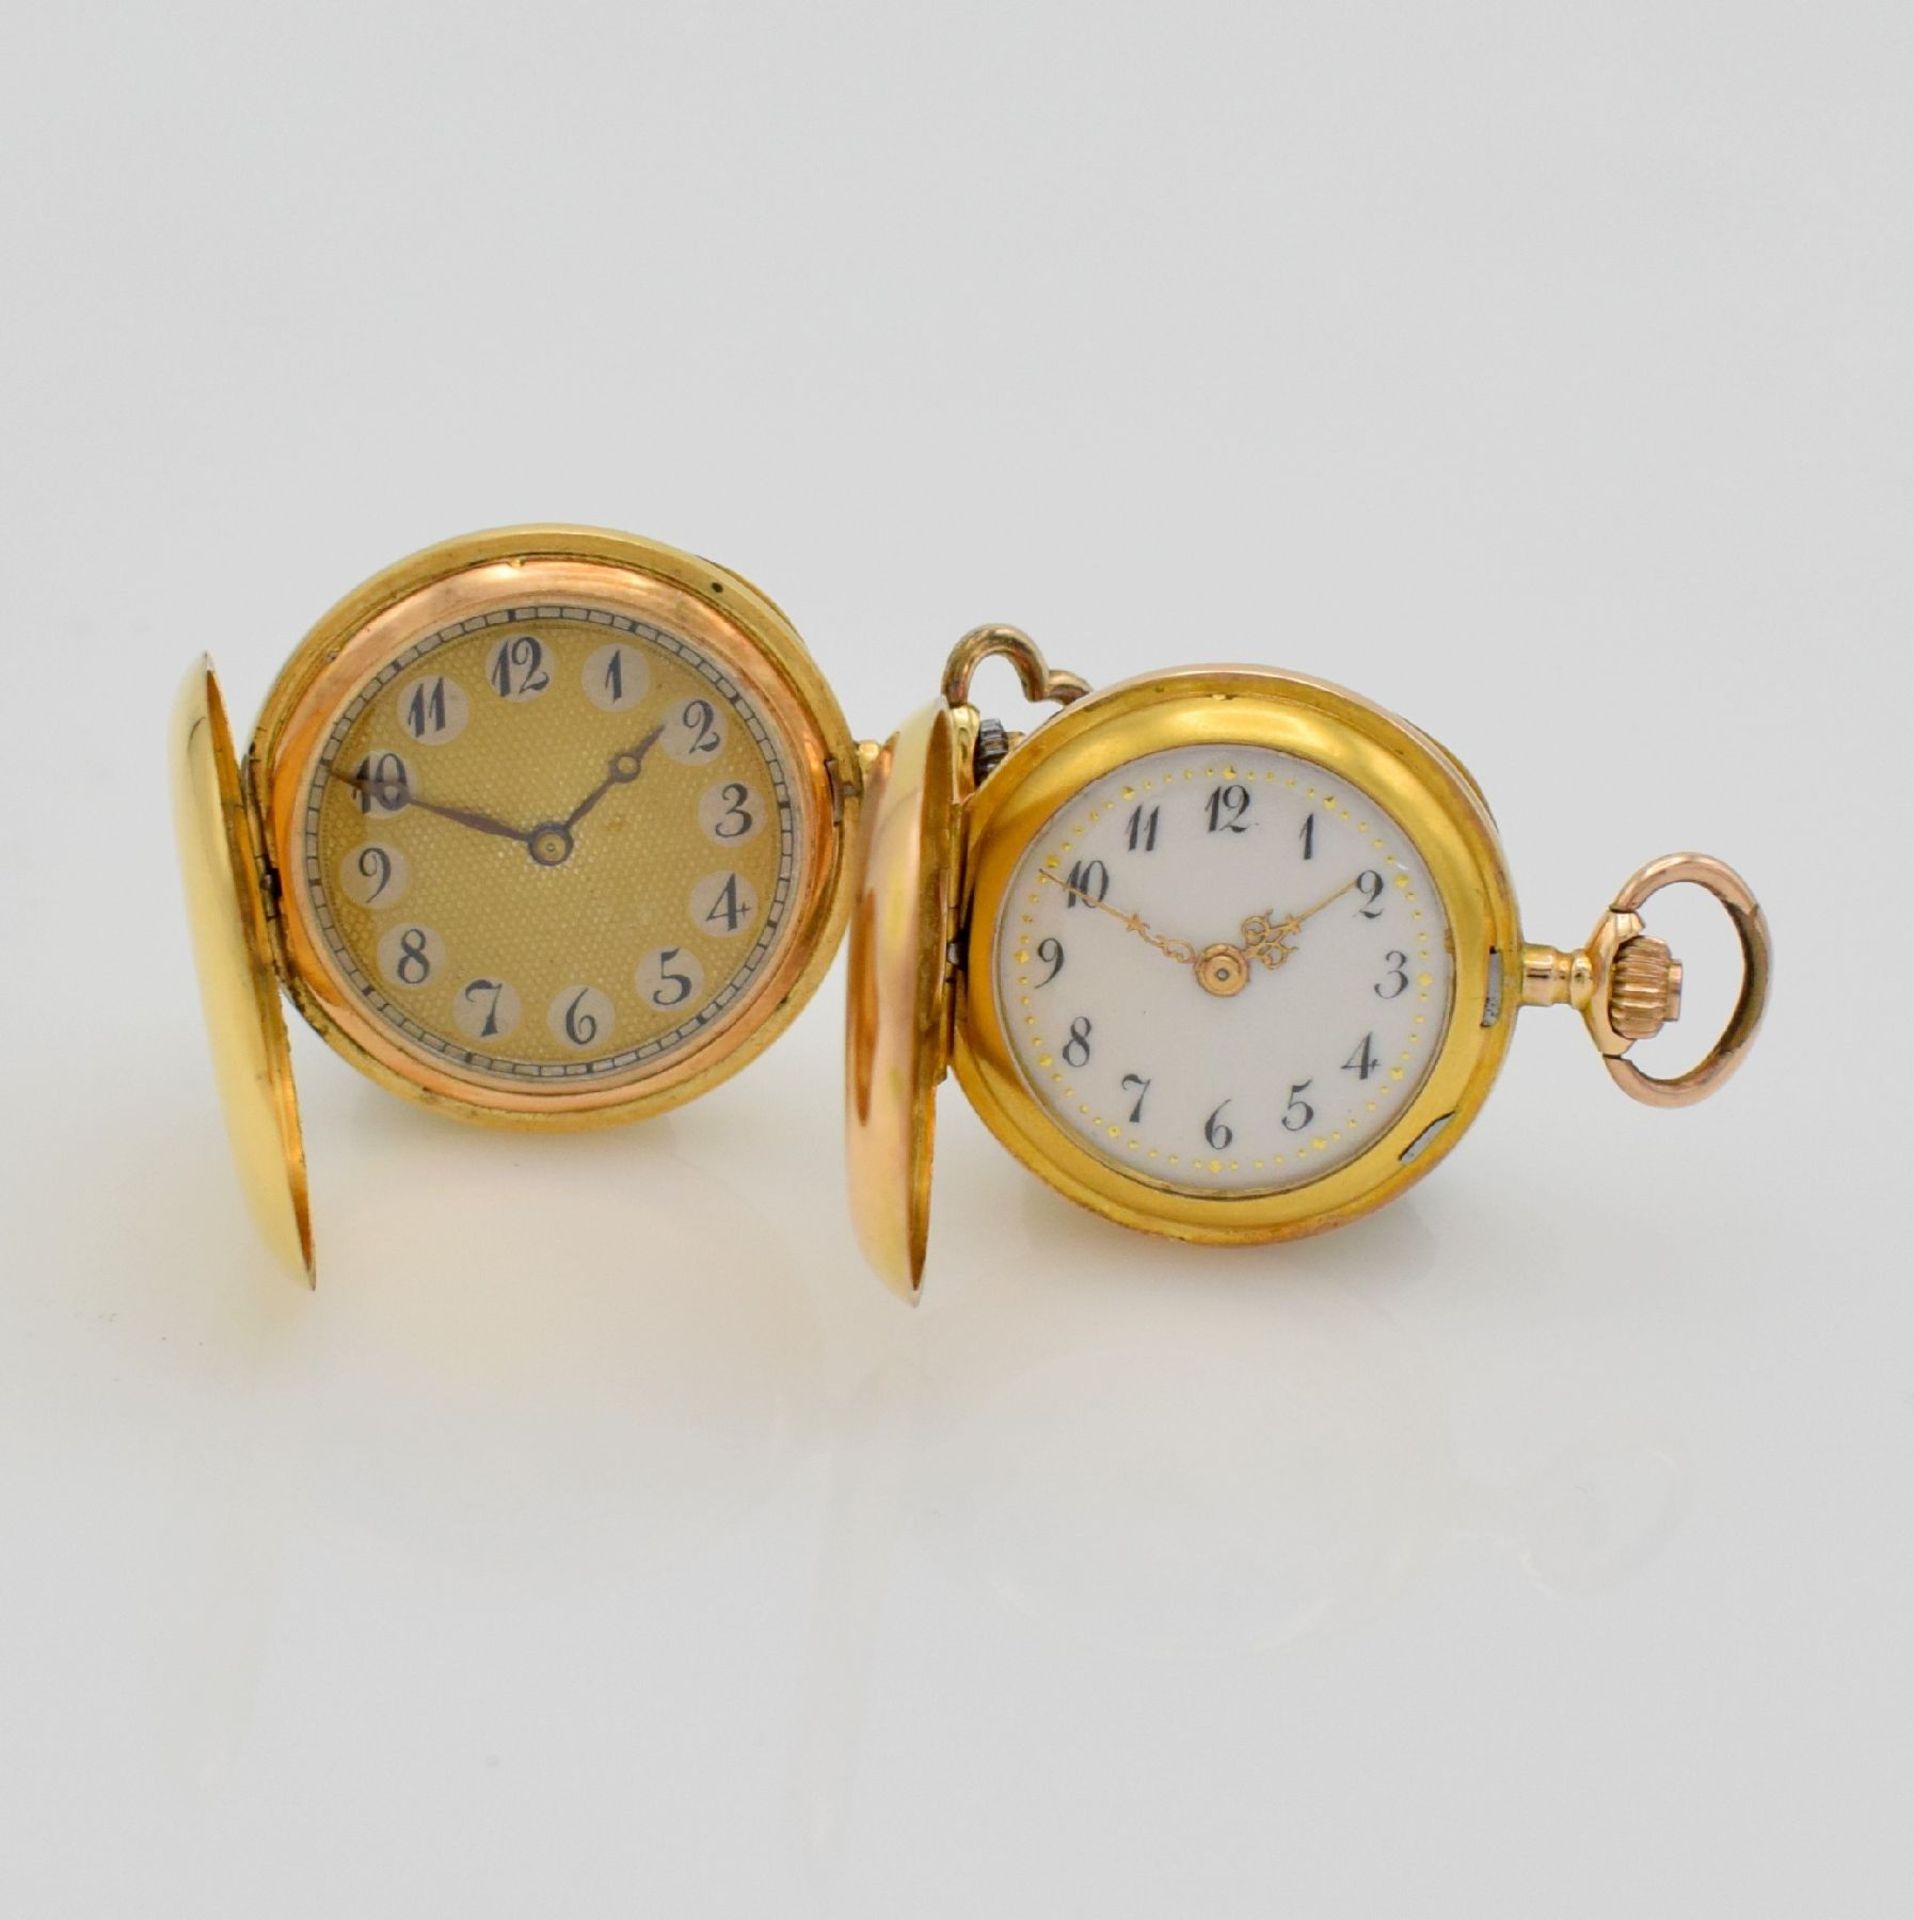 Set of 2 18k & 14k yellow gold ladies hunting cased pocket watches, Switzerland around 1890, both